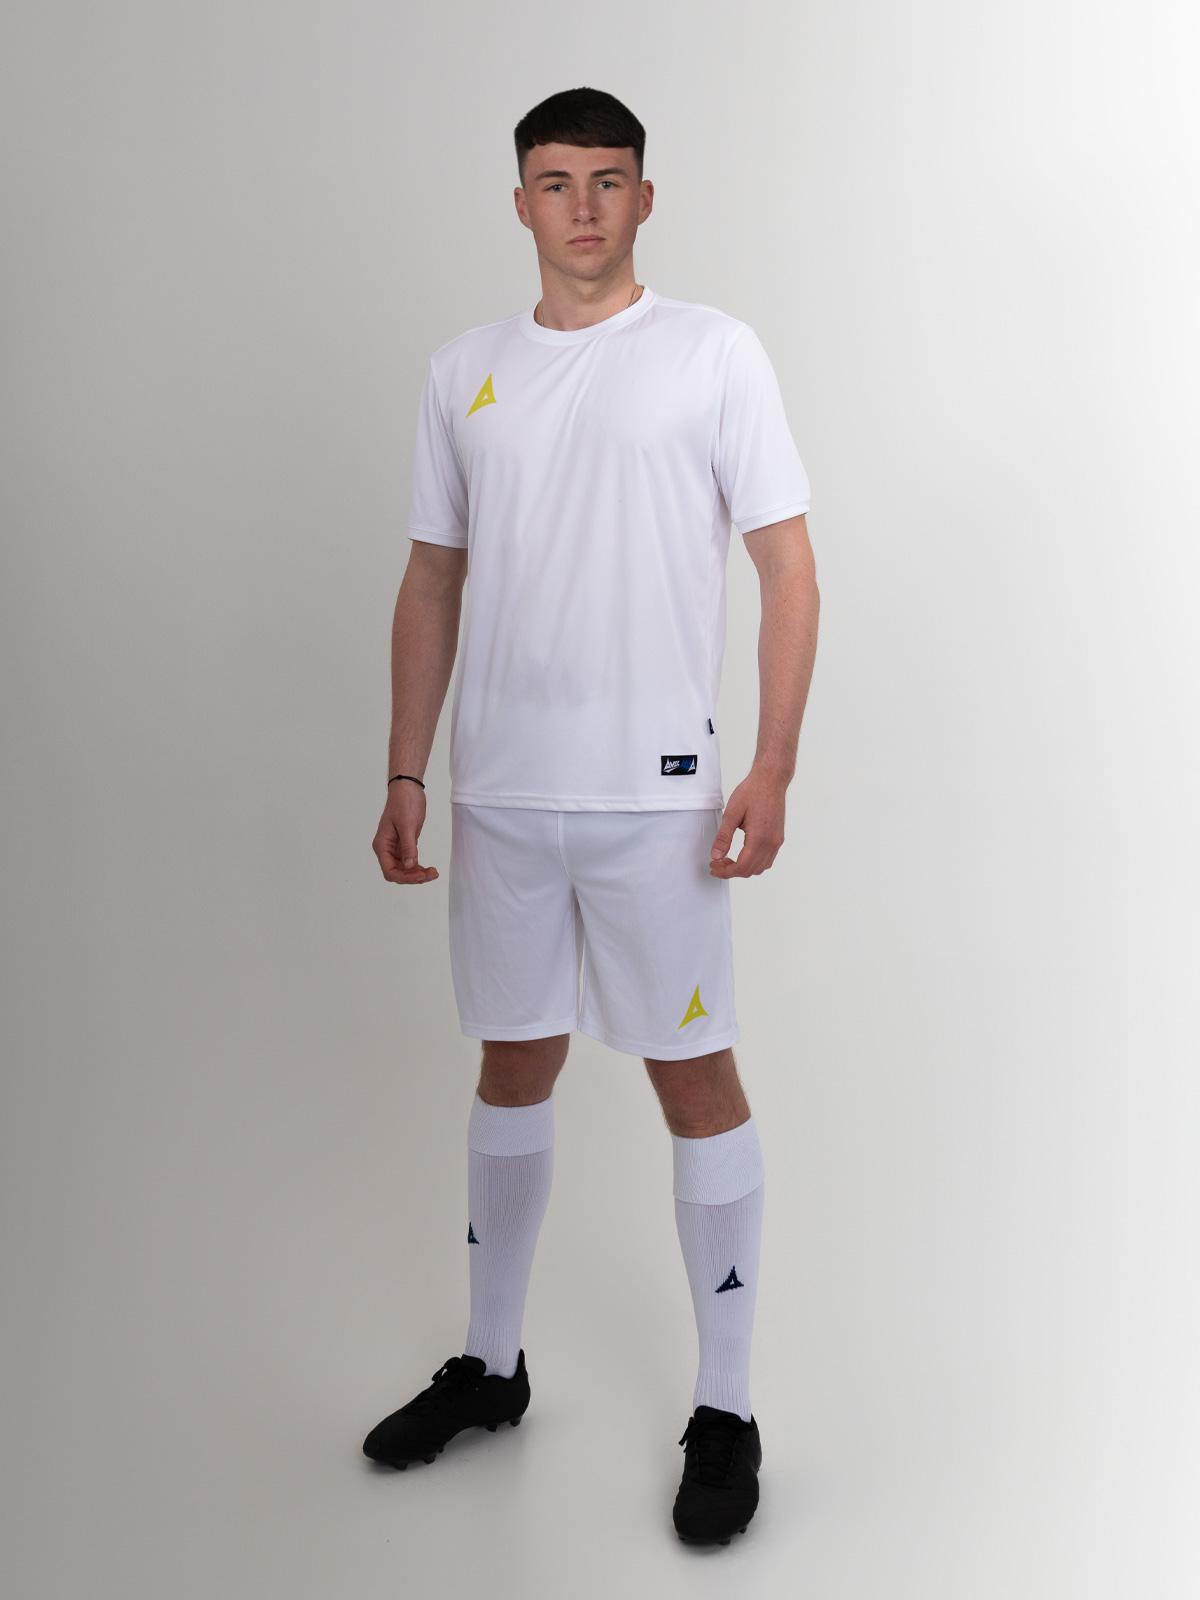 a man wearing an all white football kit